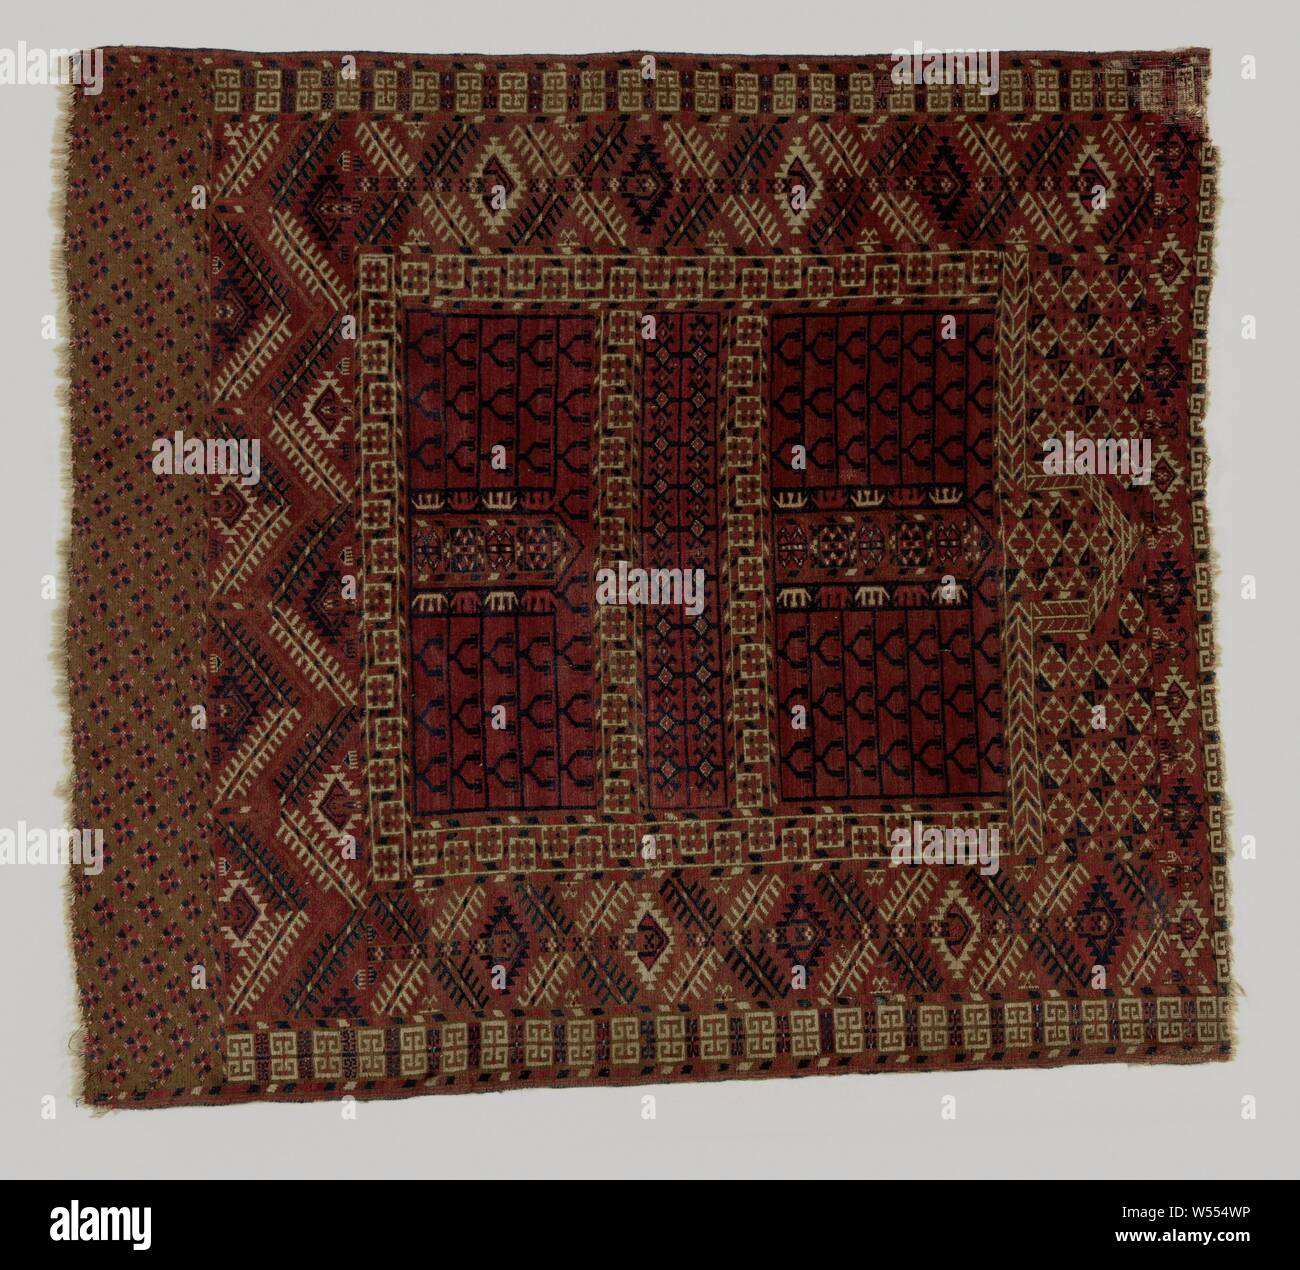 Tappeto orientale, tappeti orientali che era probabilmente utilizzato per chiudere la tenda ingresso, Tekke ensi., Tekke volk, Turkestan, c. 1830 - c. 1870, ketting, h 133 cm × W 121 cm Foto Stock